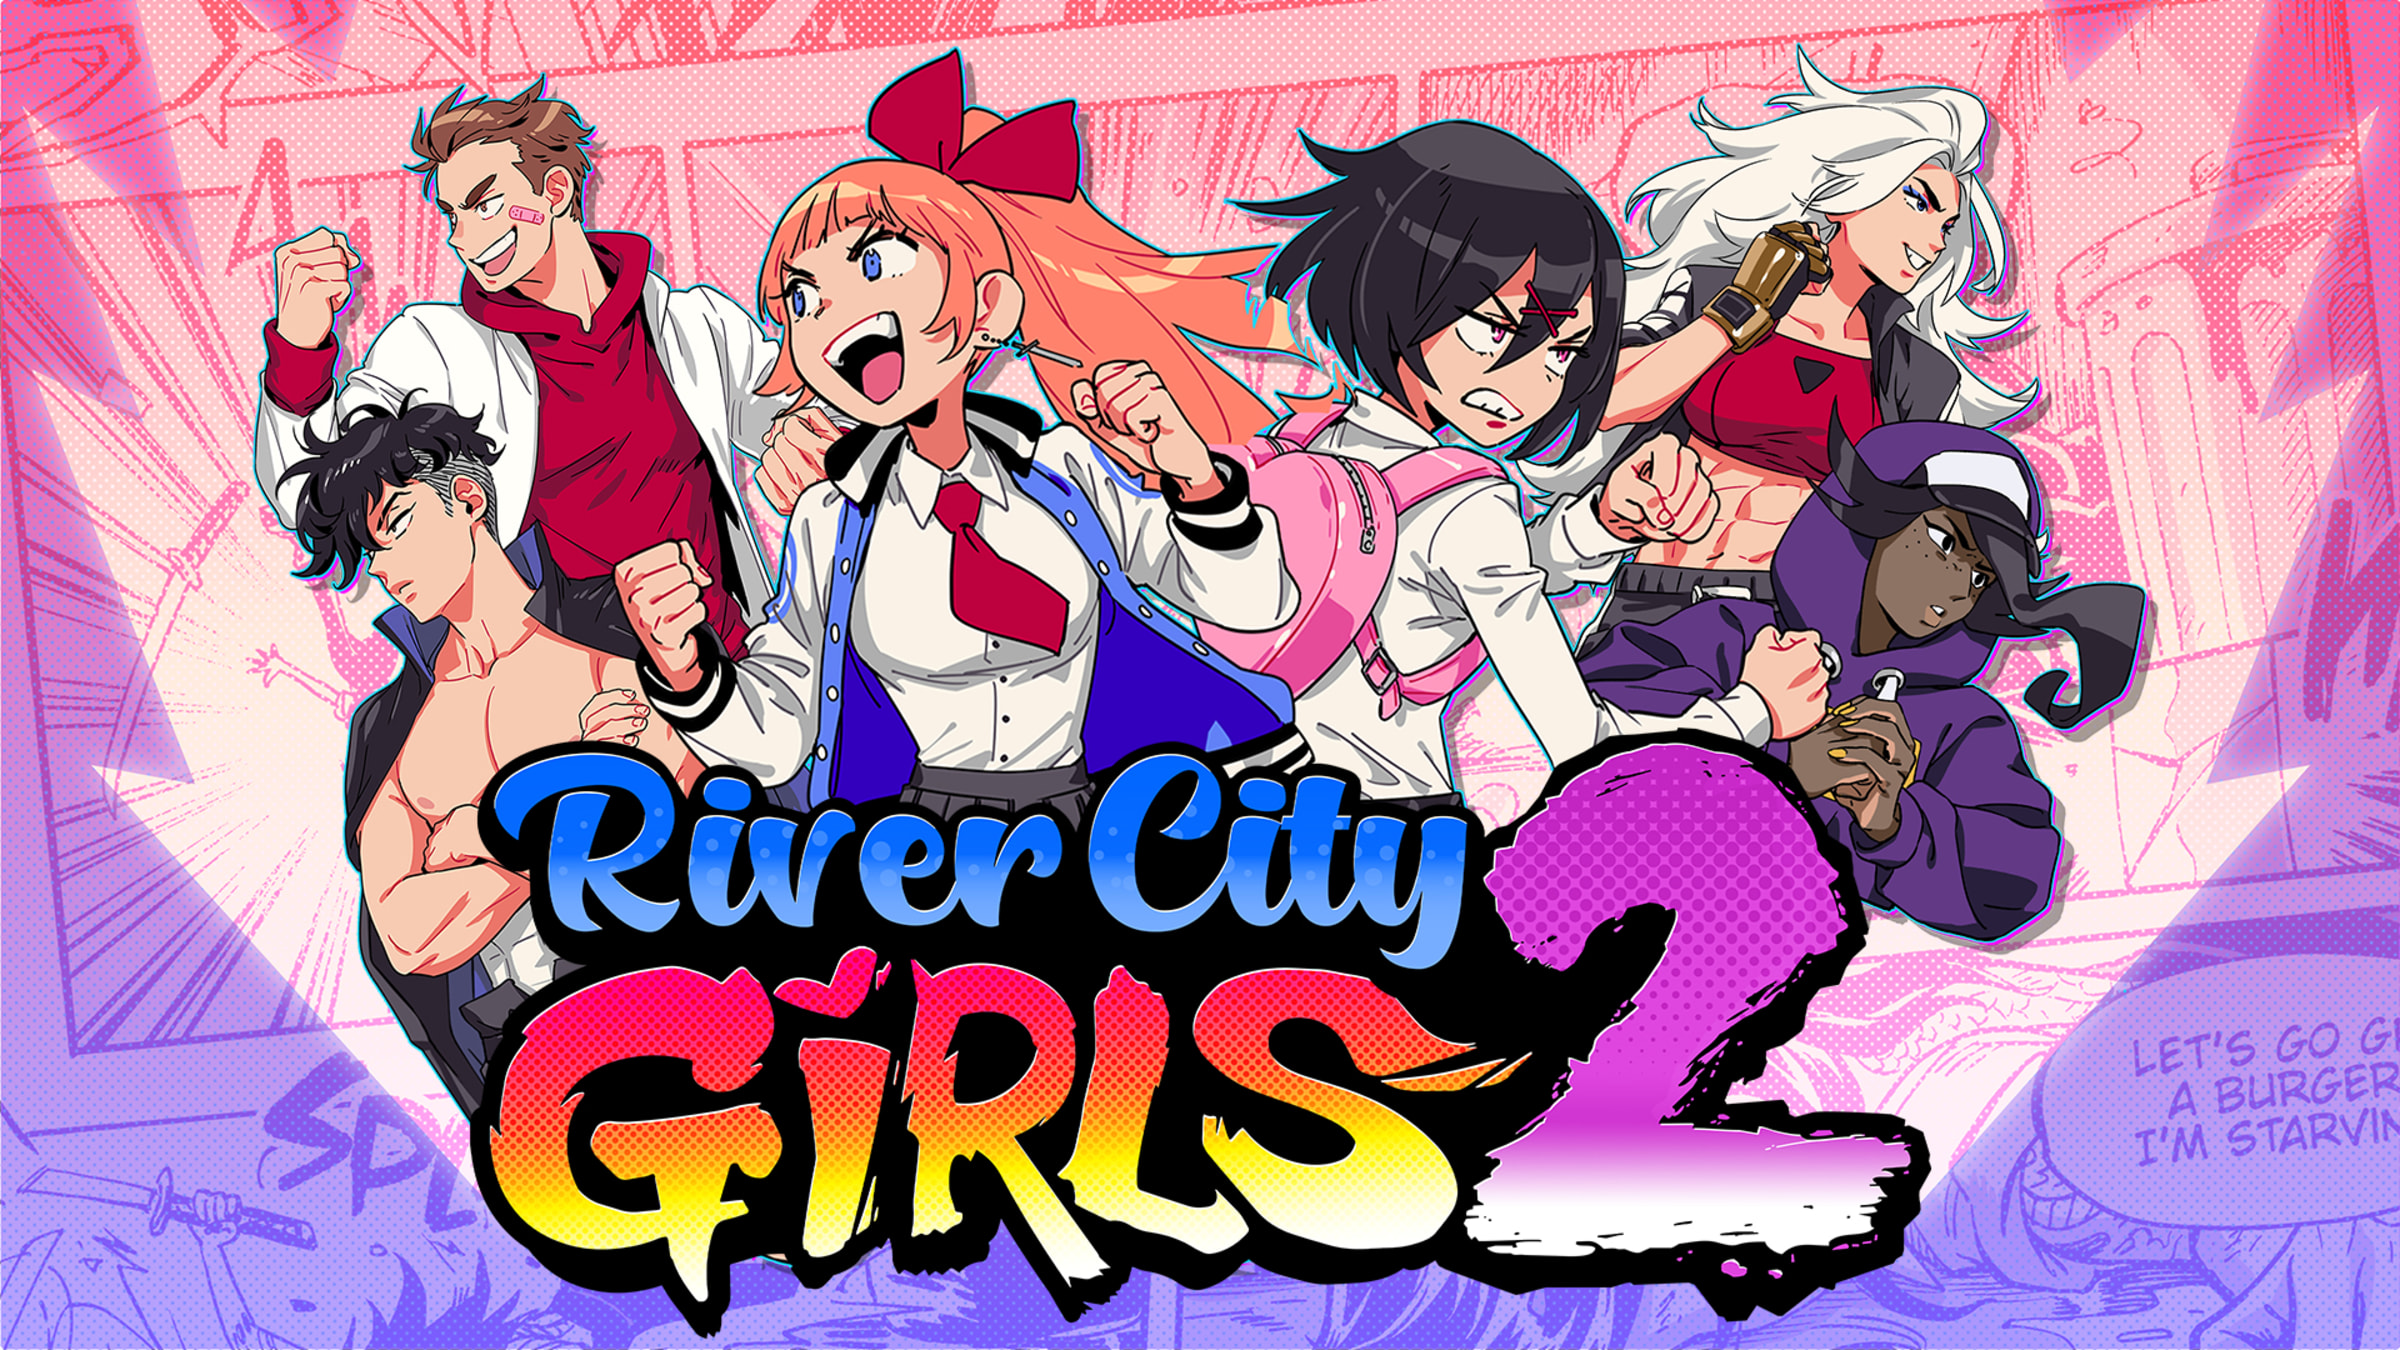 River City Girls 2 update adds 4-player online co-op